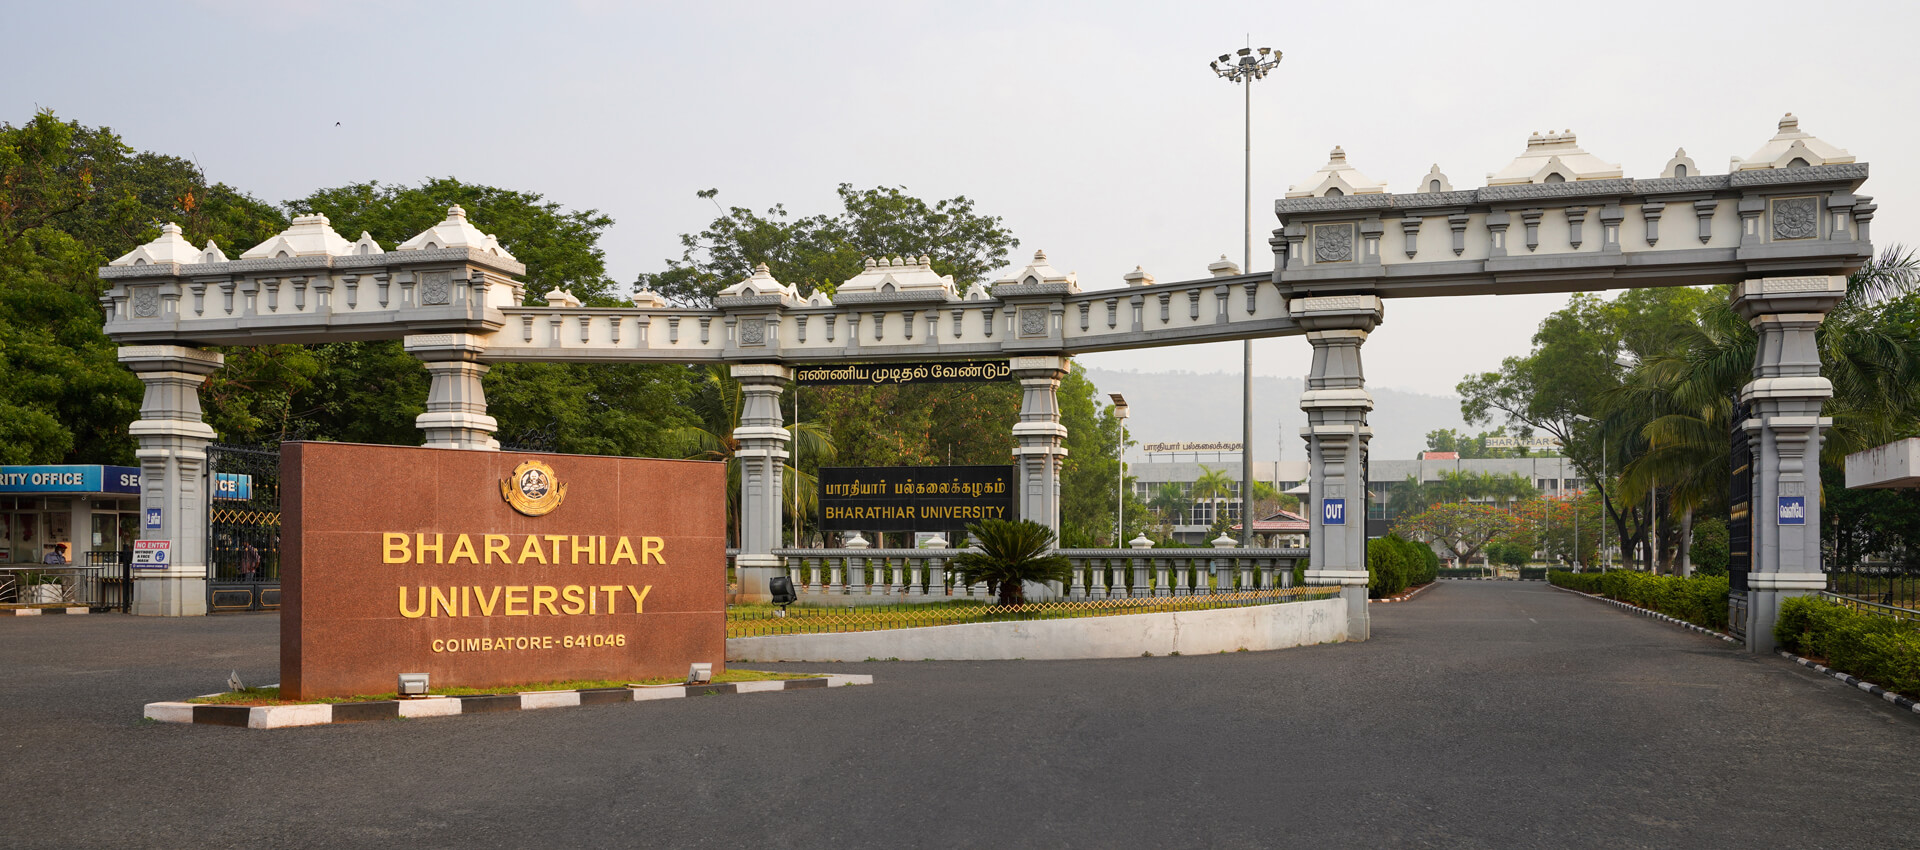 Bharathiar University Entrance